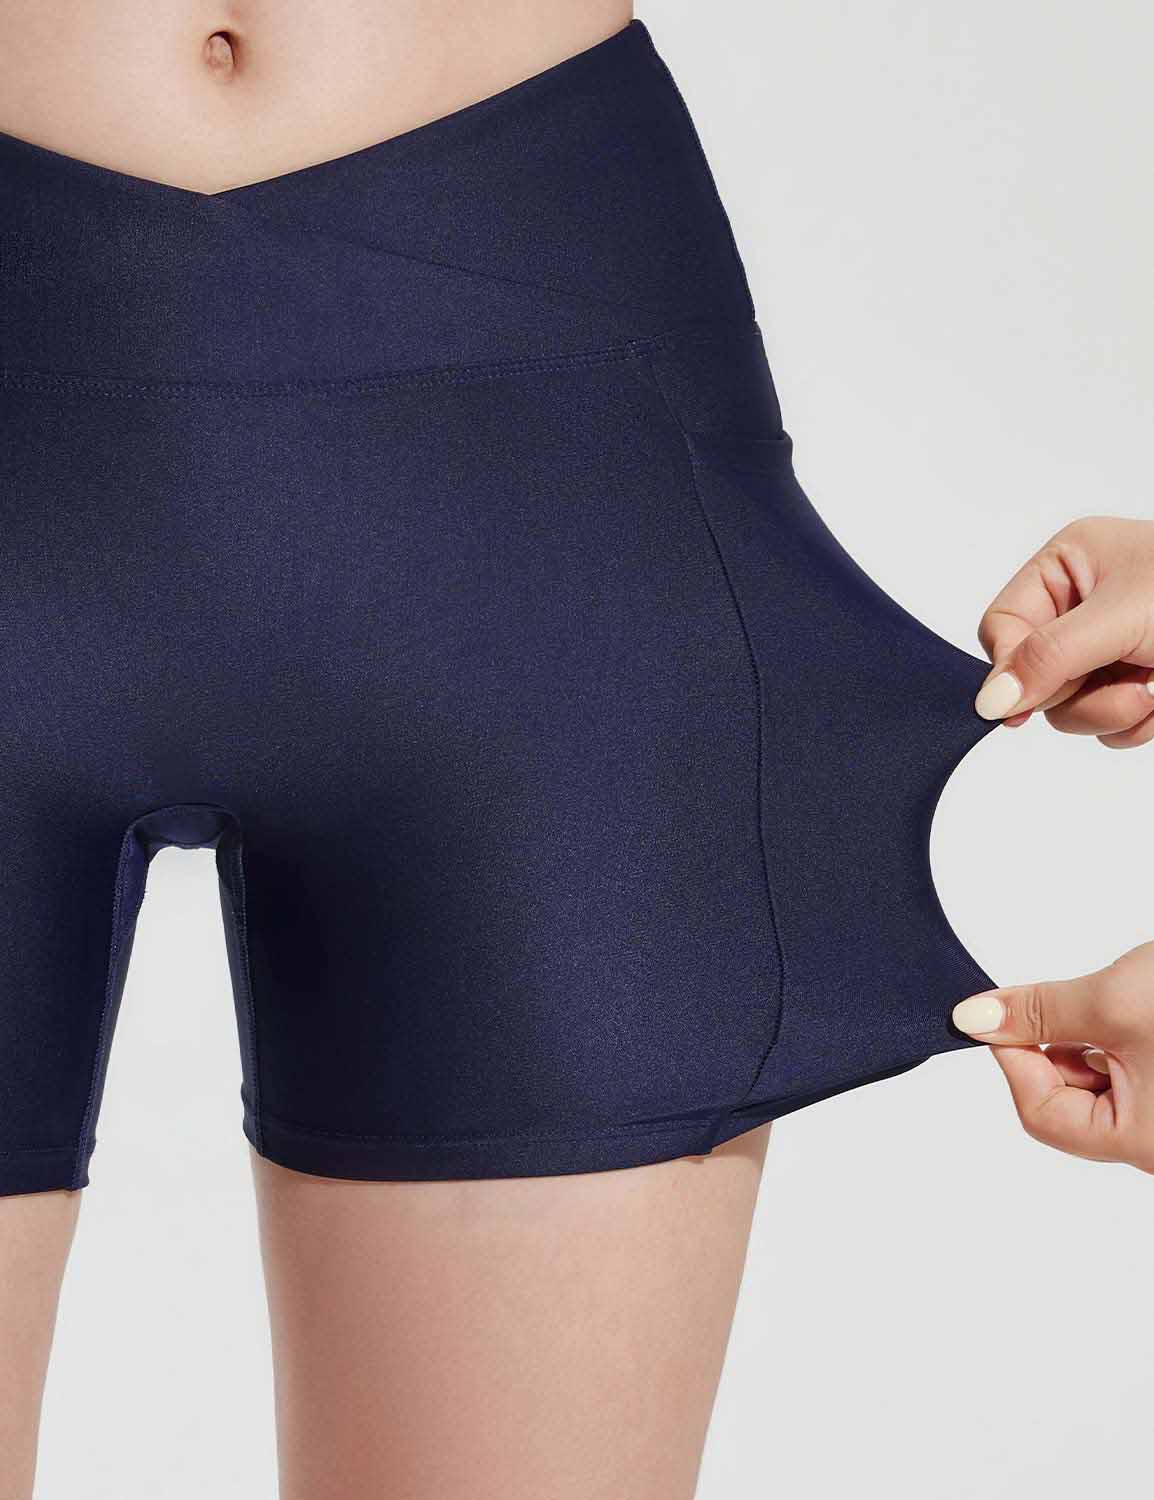 Baleaf Women's Quick Dry Pocket Casual Swim Shorts Peacoat Details